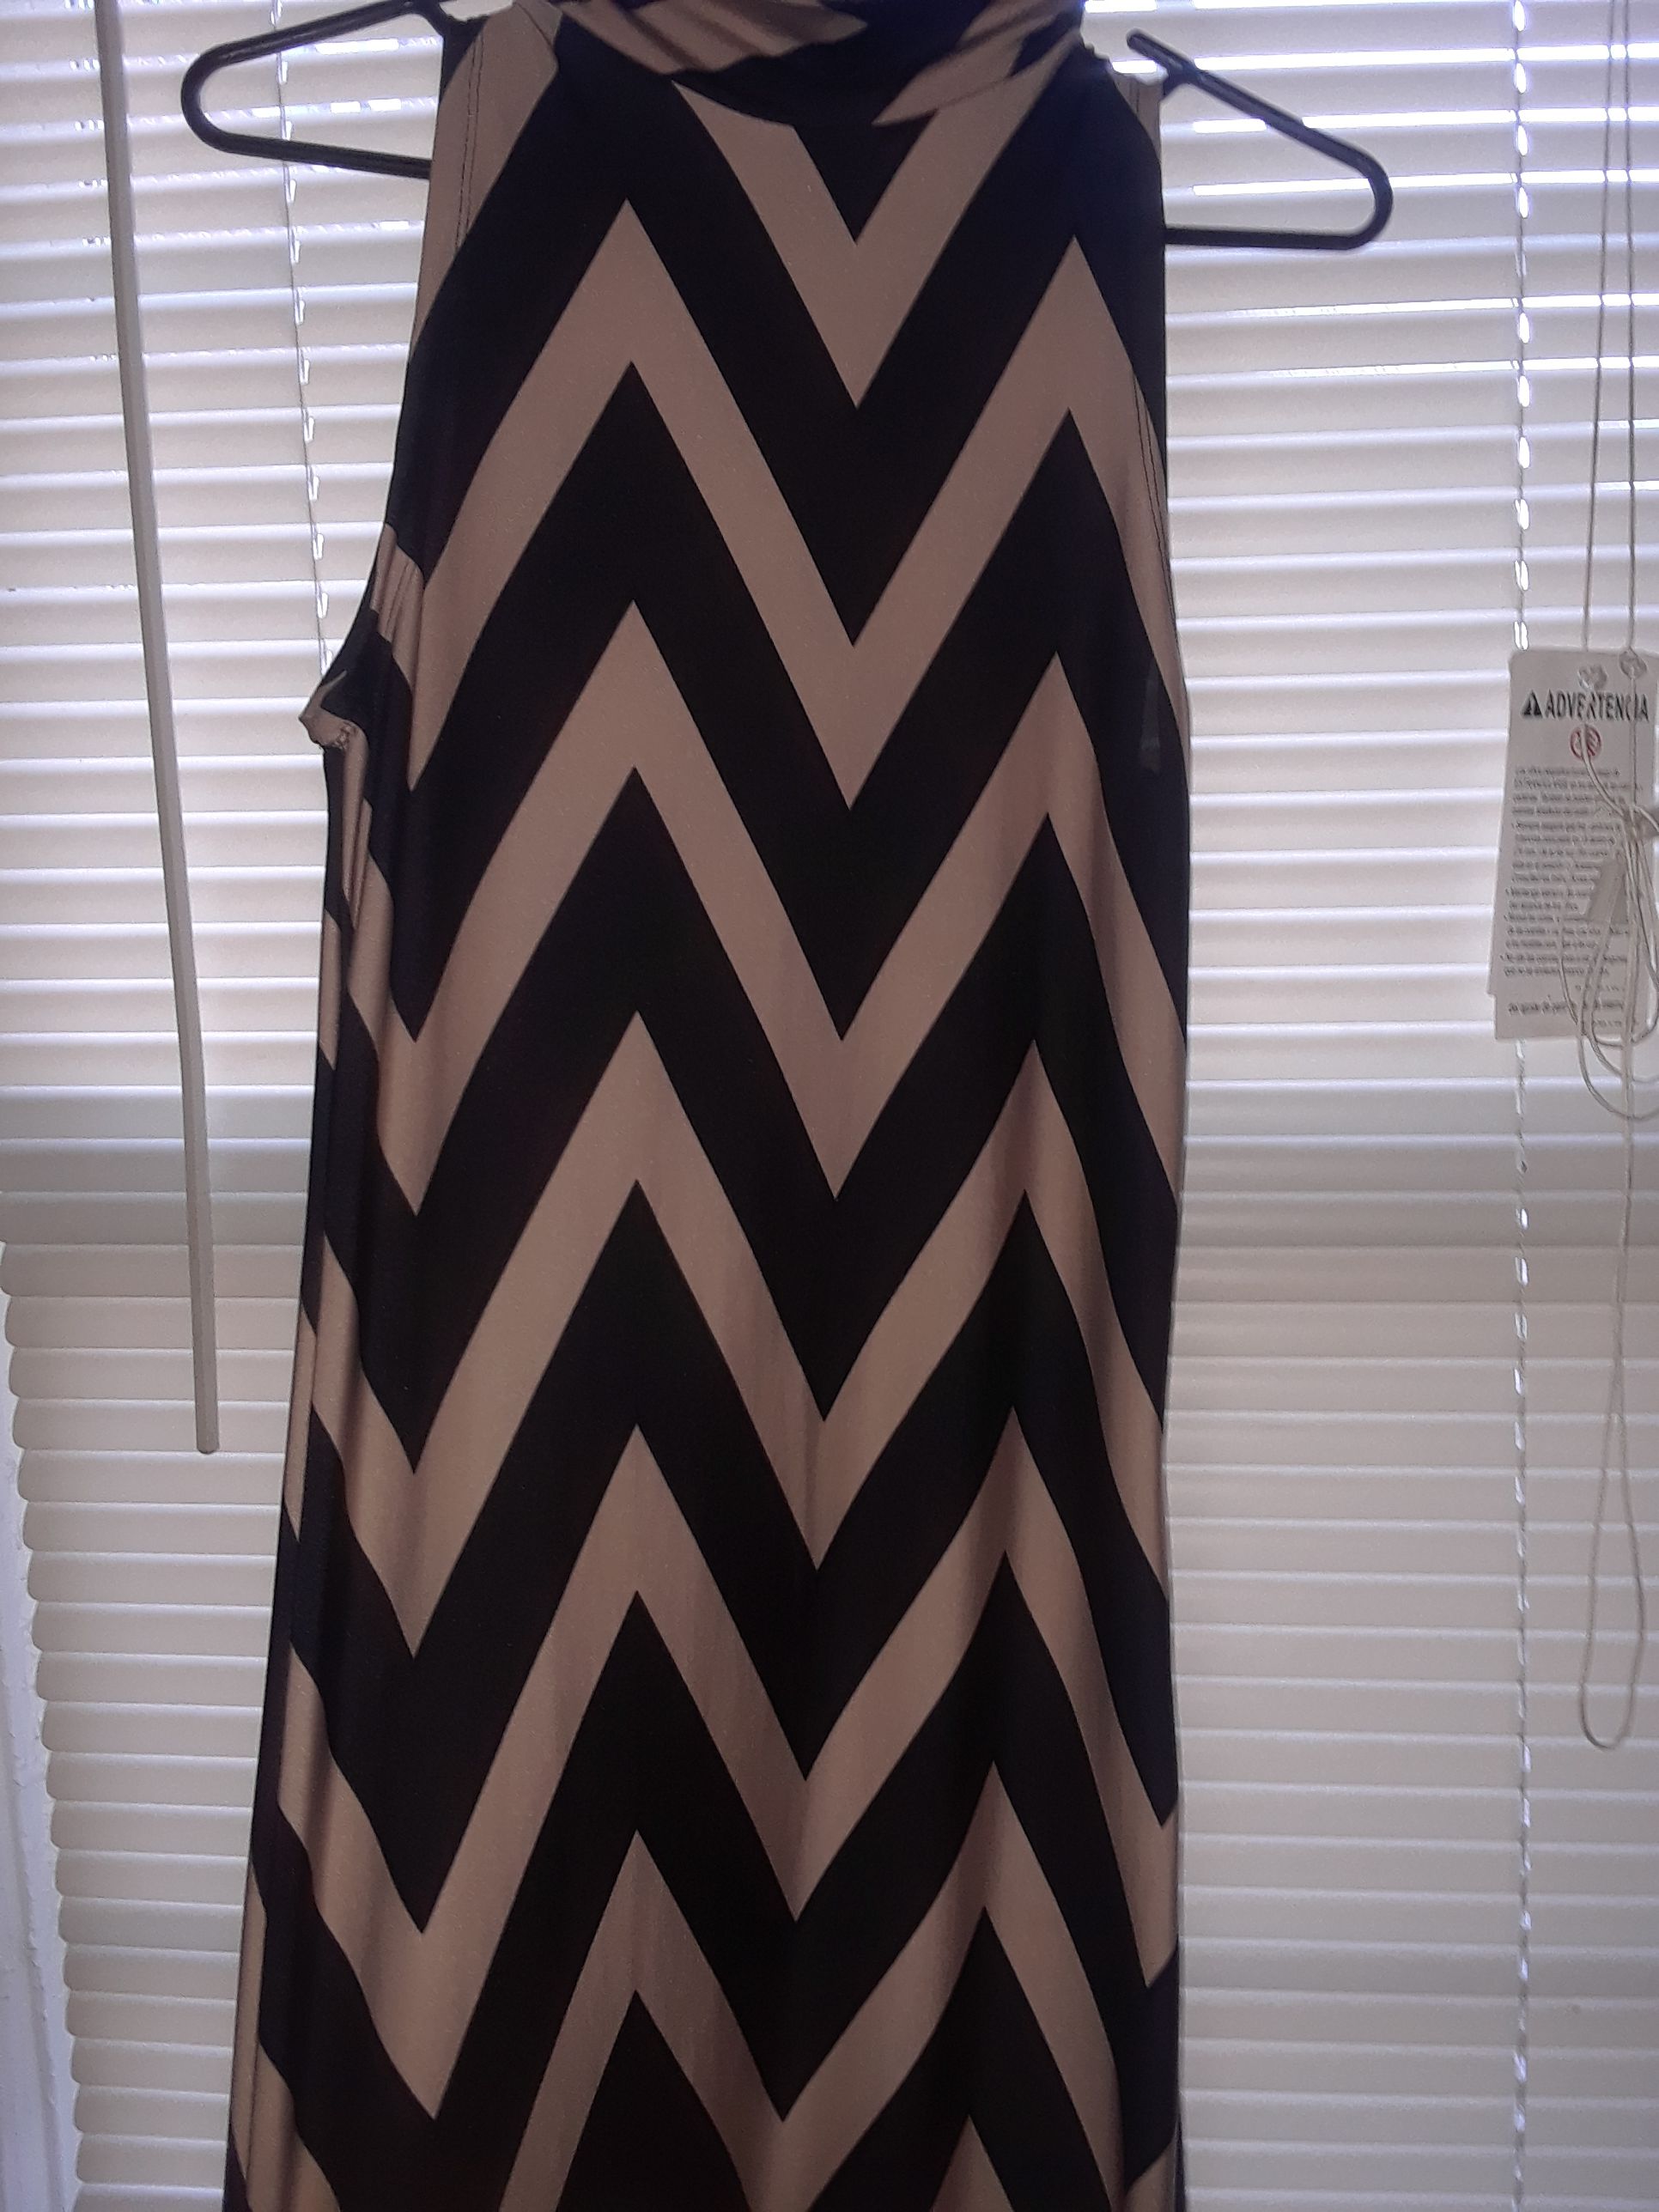 Classy striped dress